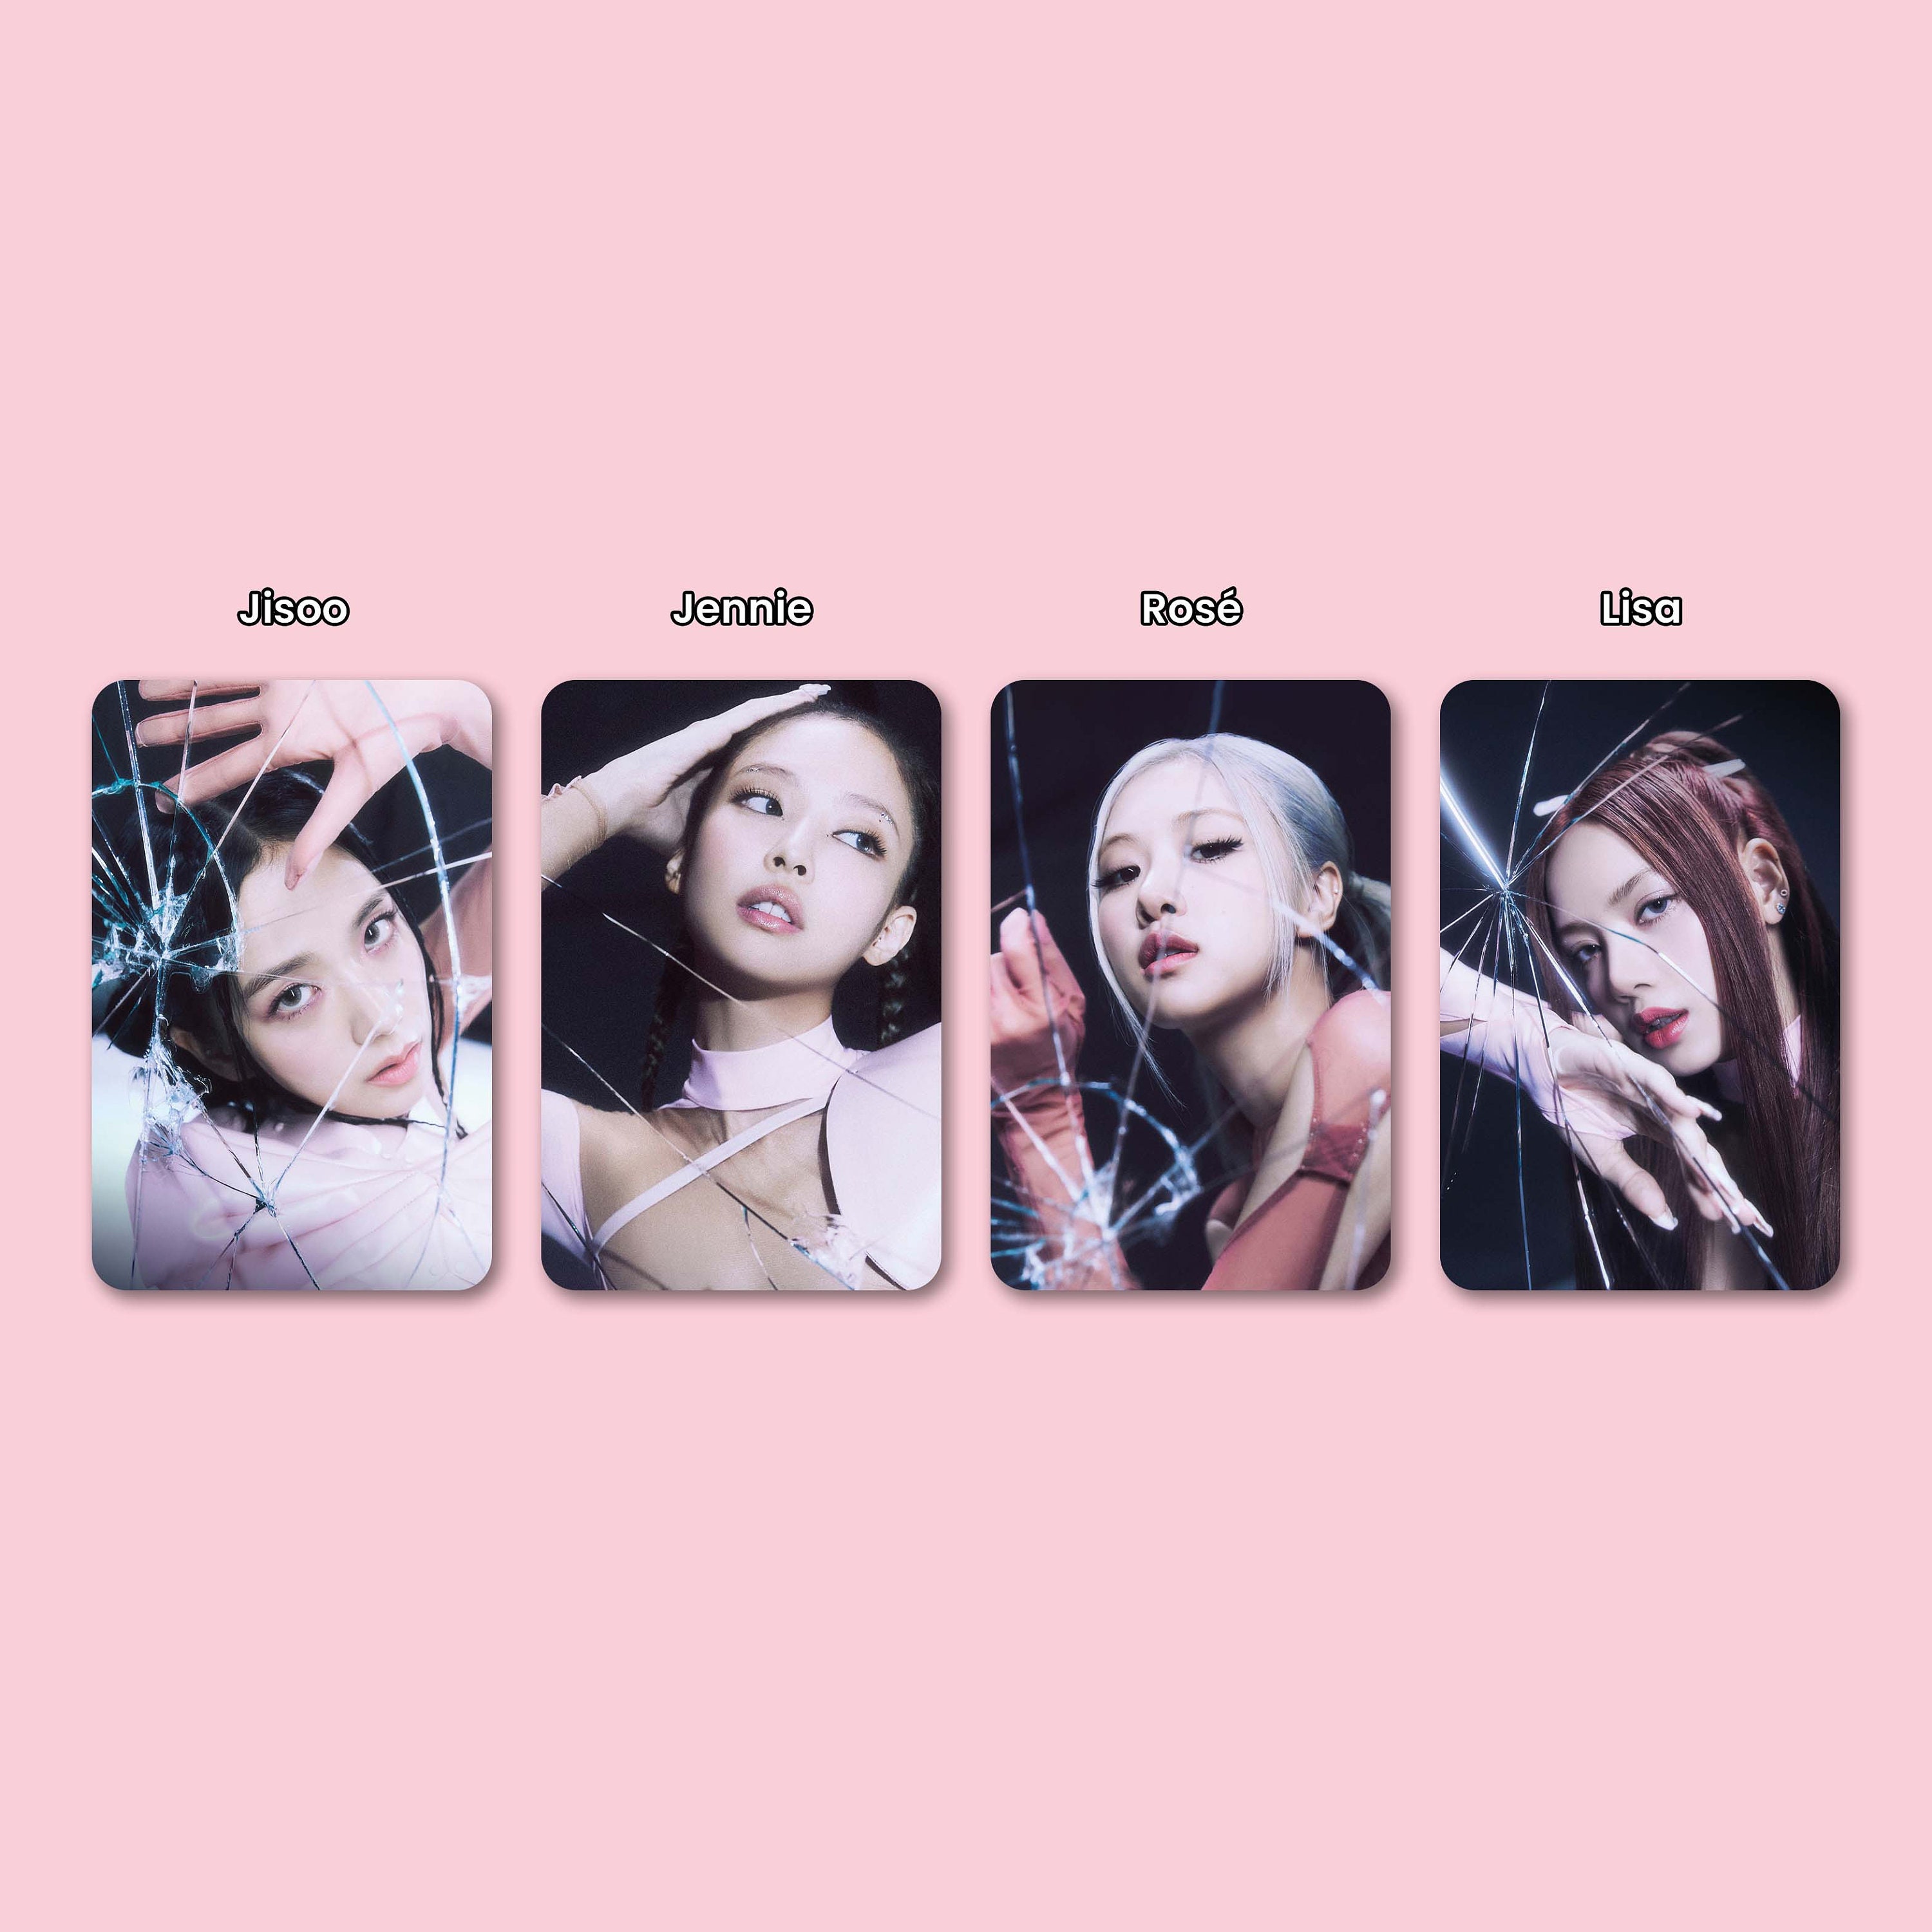 blackpink lisa 'born pink' album polaroid photocard